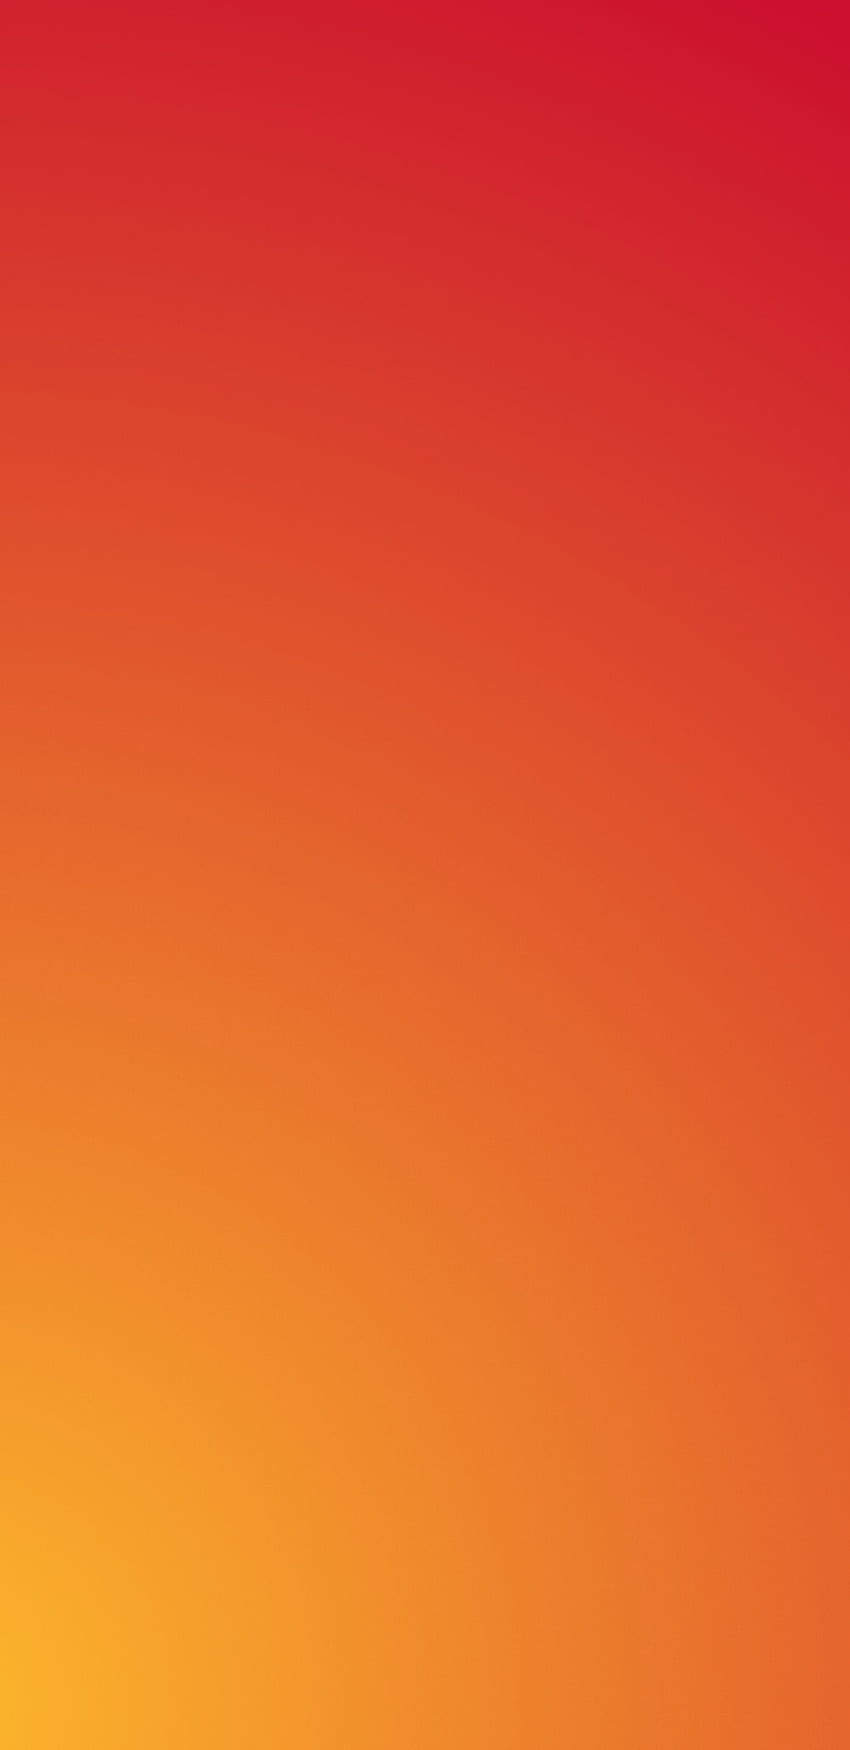 iPadOS Wallpaper 4K Stock Orange White background 1551